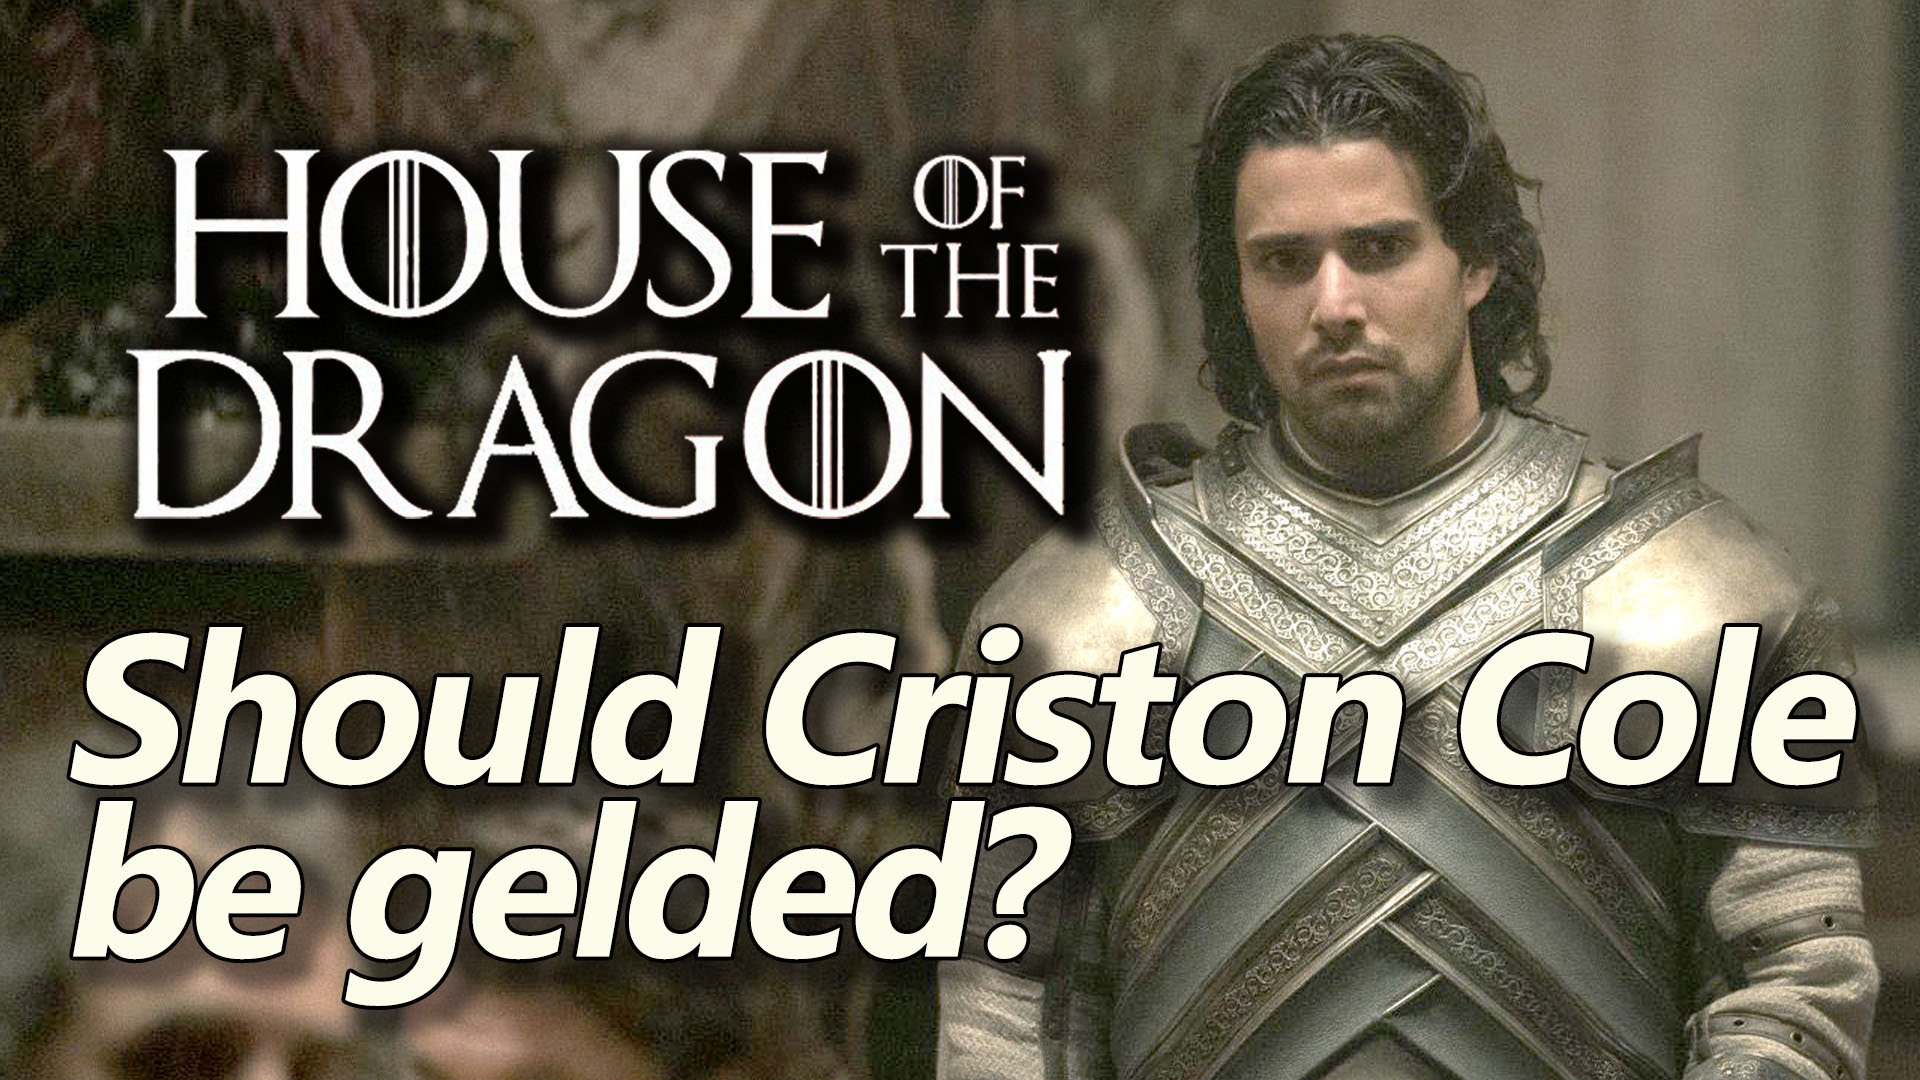 House Of The Dragon recap: Season 1, Episode 5, “We Light The Way”